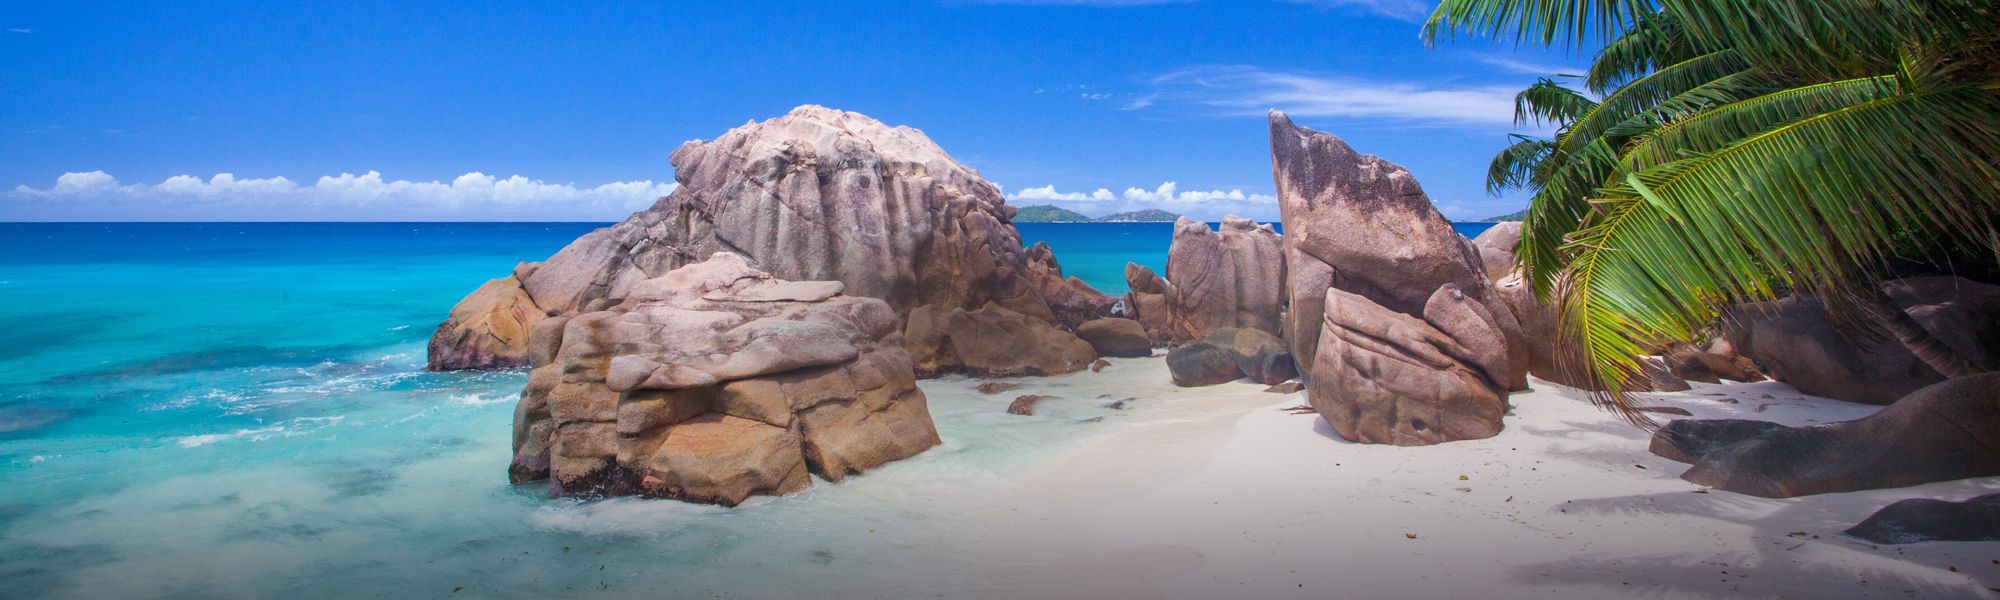 Voyage Seychelles © Raymond Sahuquet/Seychelles Tourism Board